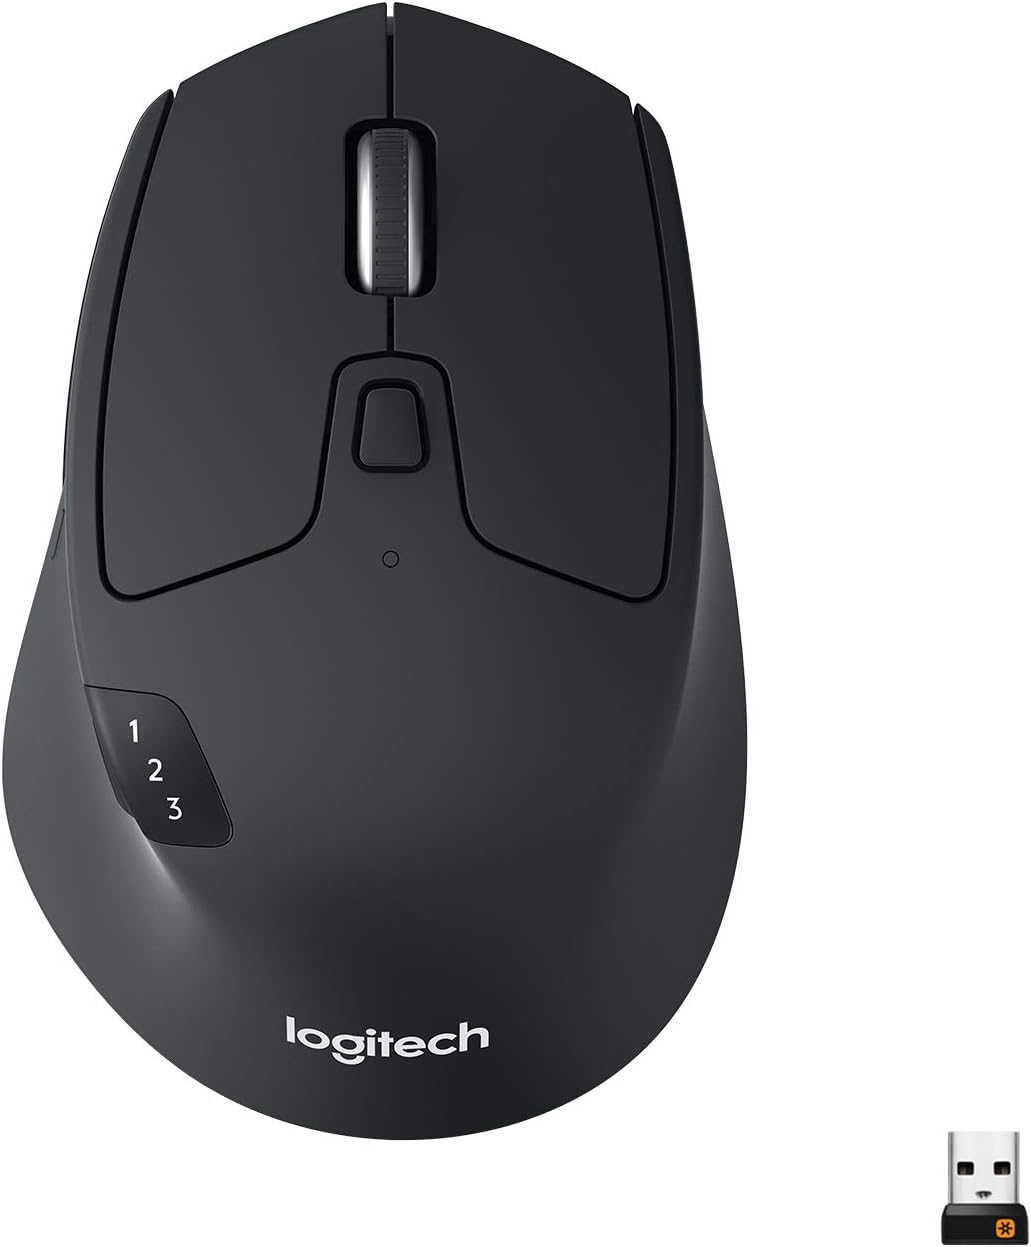 Review of Logitech M720 Triathlon Multi-Device Wireless Mouse